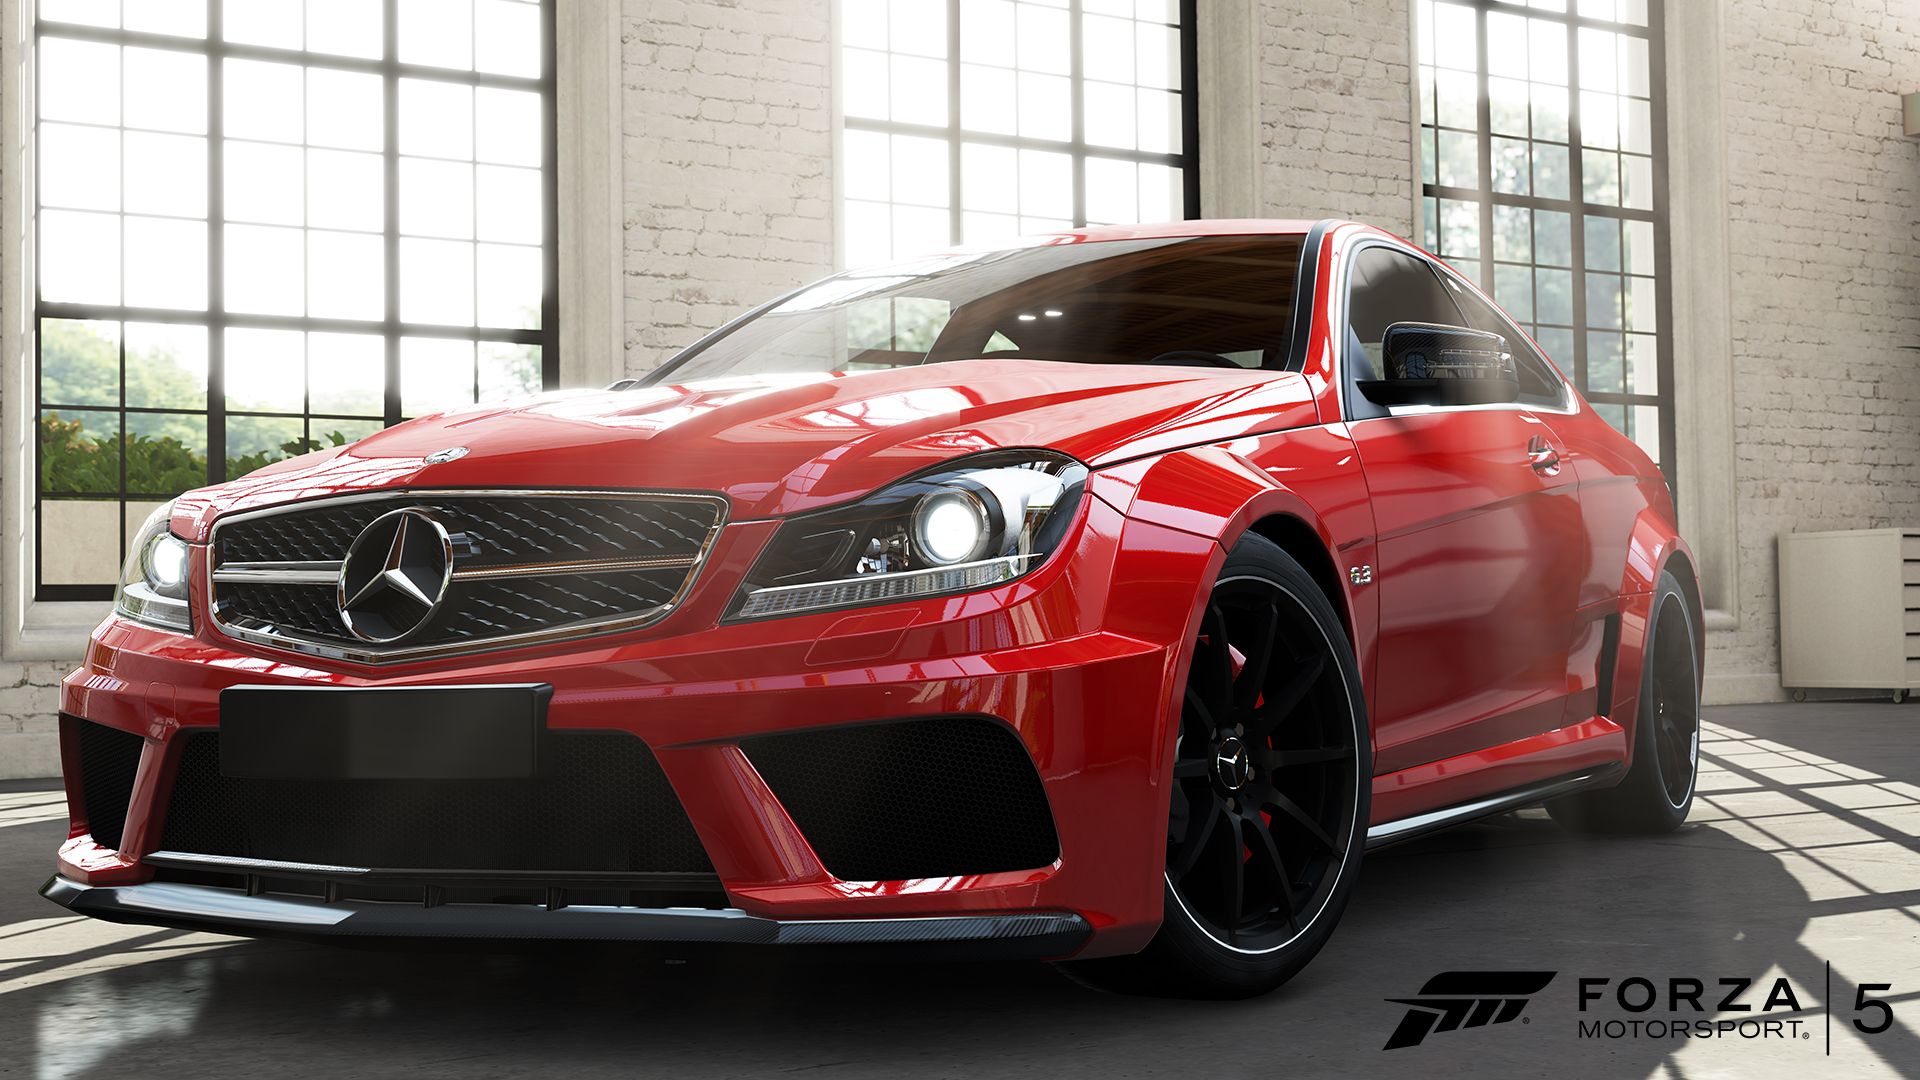 Forza-Motorsport-5-Gets-Gorgeous-Batch-of-Screenshots-394385-3.jpg